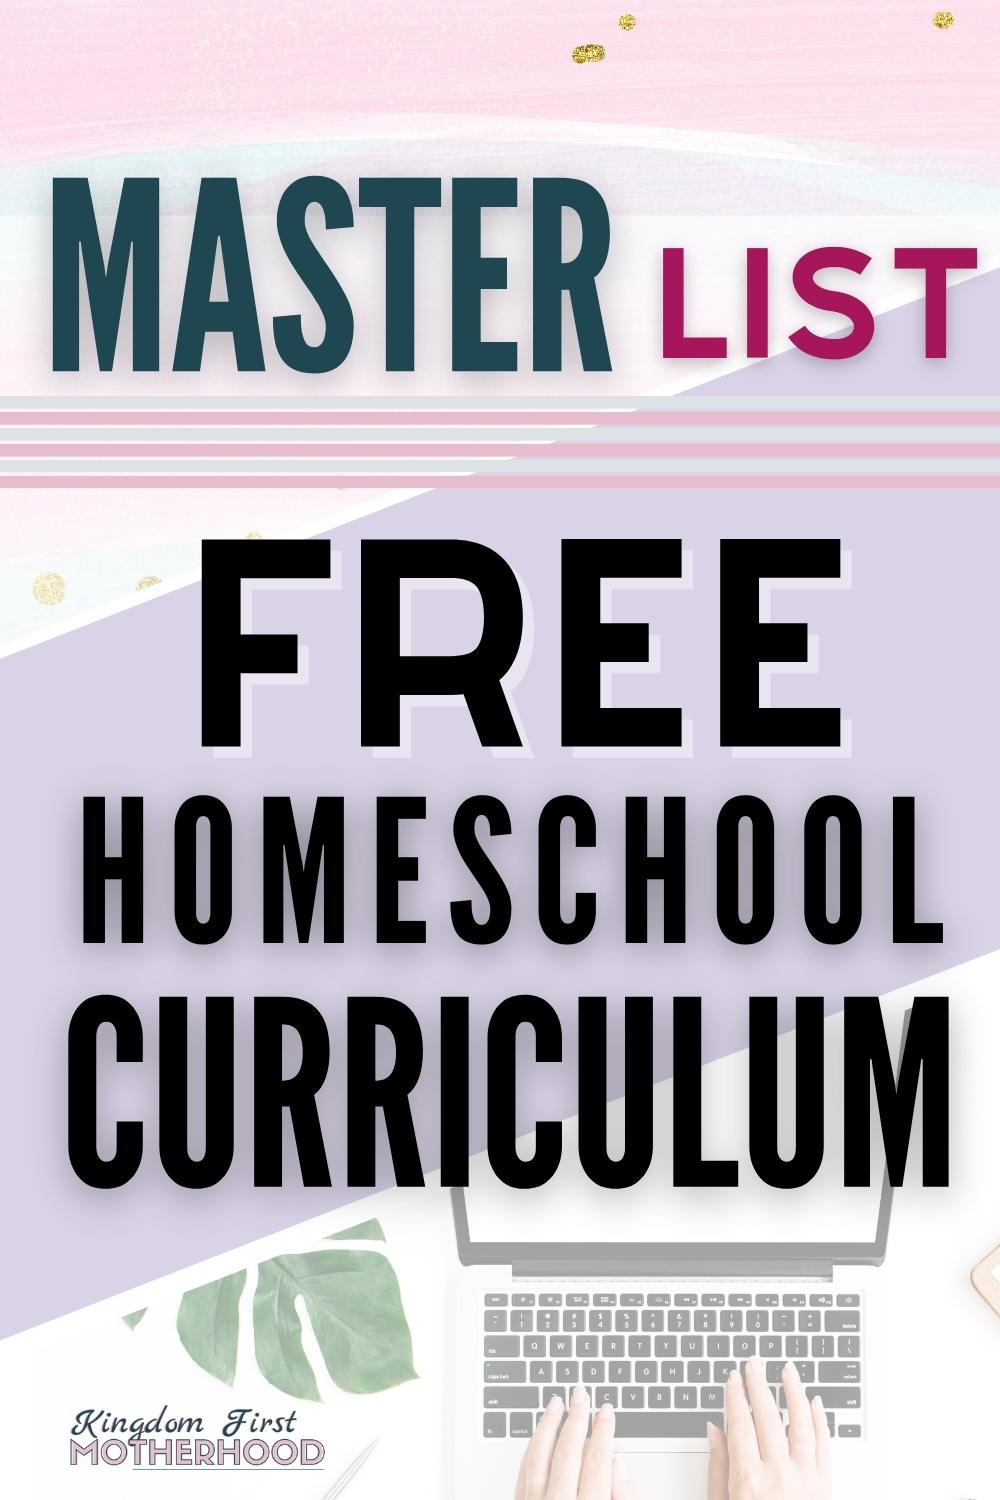 master-list-of-free-homeschool-curriculum-kingdom-first-motherhood-by-forest-rose